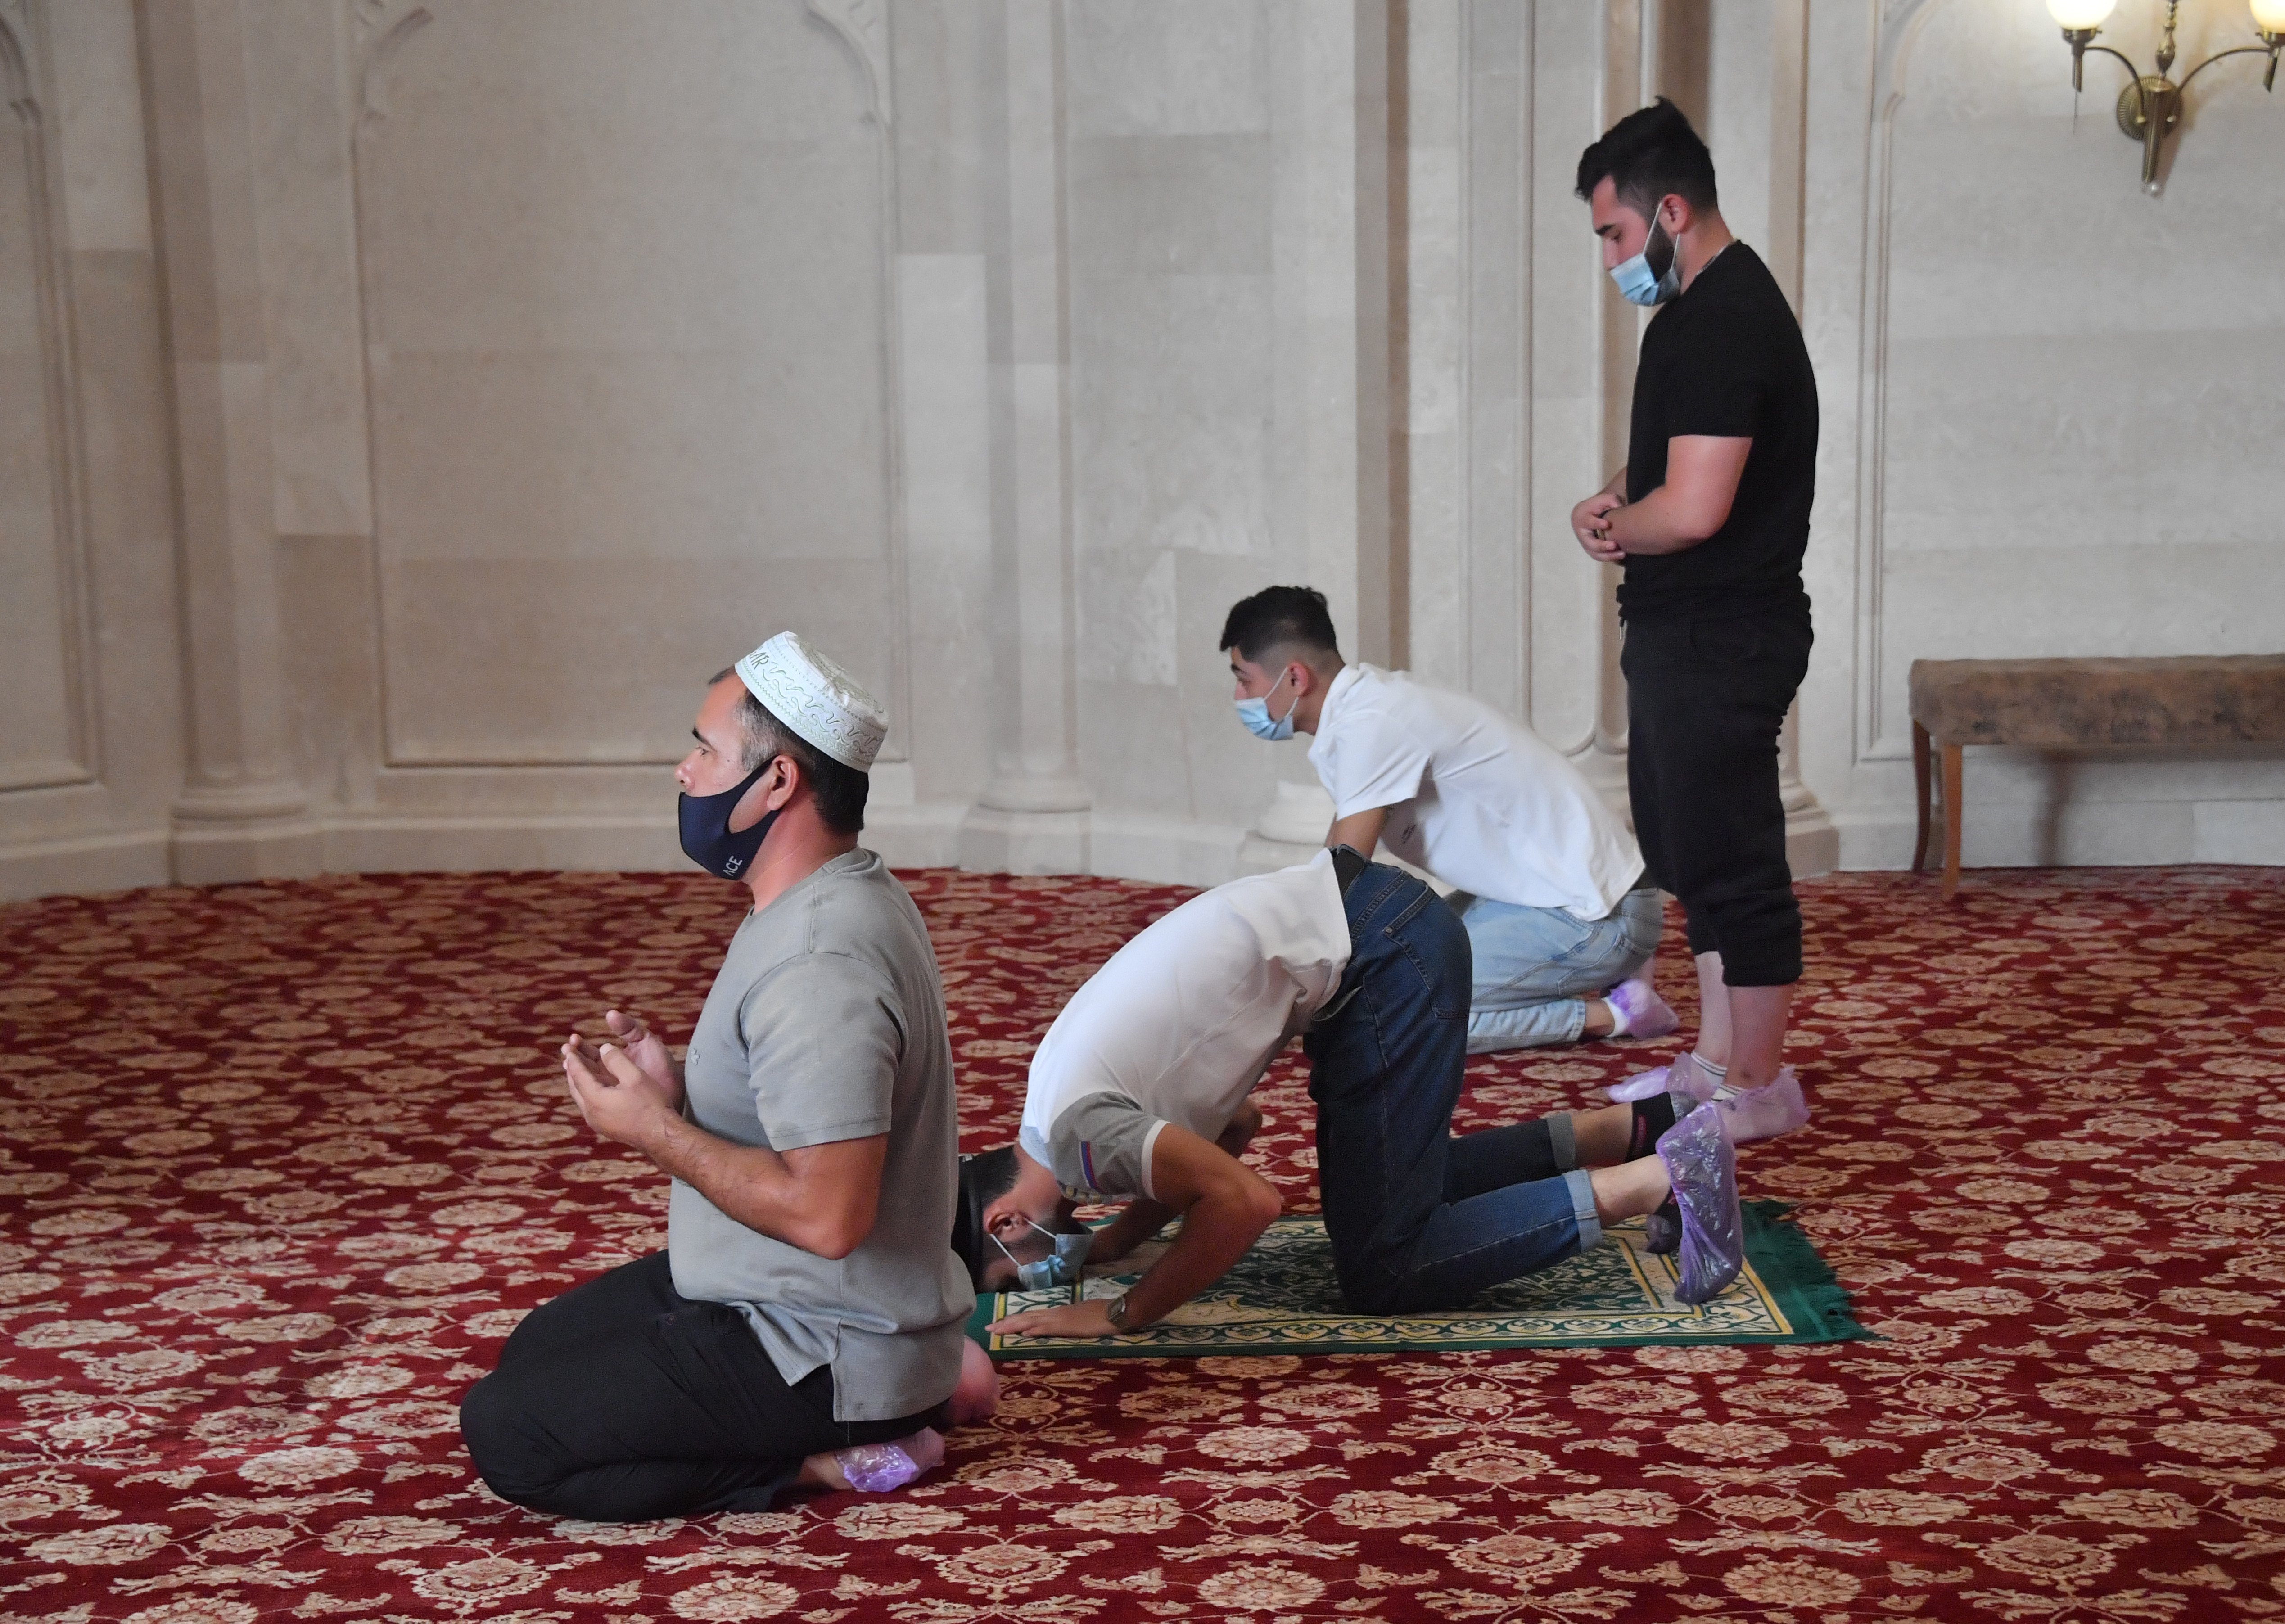 Намаз куйбышева. Мусульмане молятся в мечети. Коллективный намаз в мечети. Мужчина в мечети. Молебны мусульман в мечети.